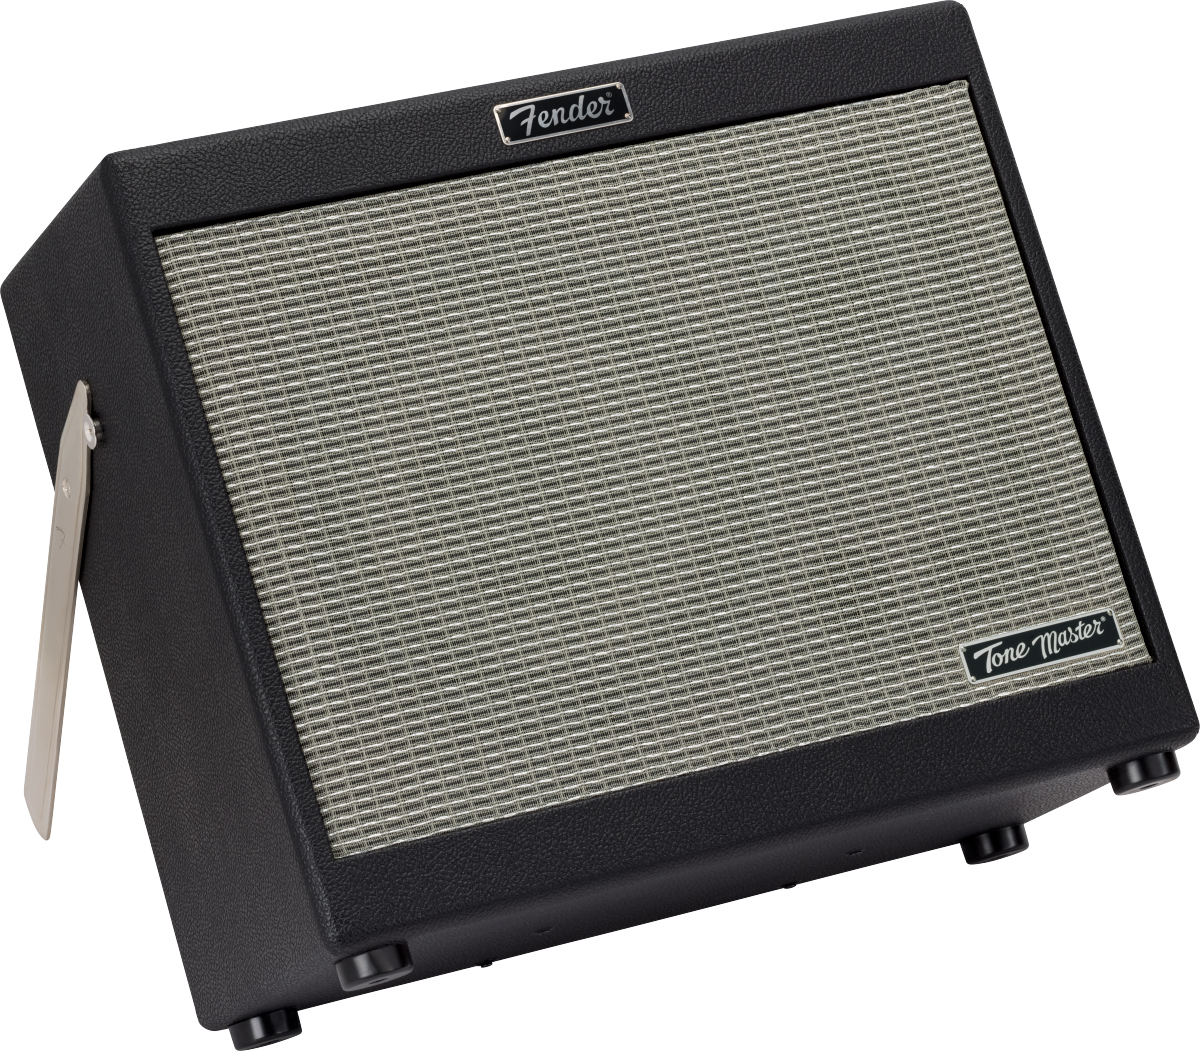 Fender Tone Master Fr-10 Powered Speaker Cab 1x10 1000w - Ampli Guitare Électrique Combo - Variation 3